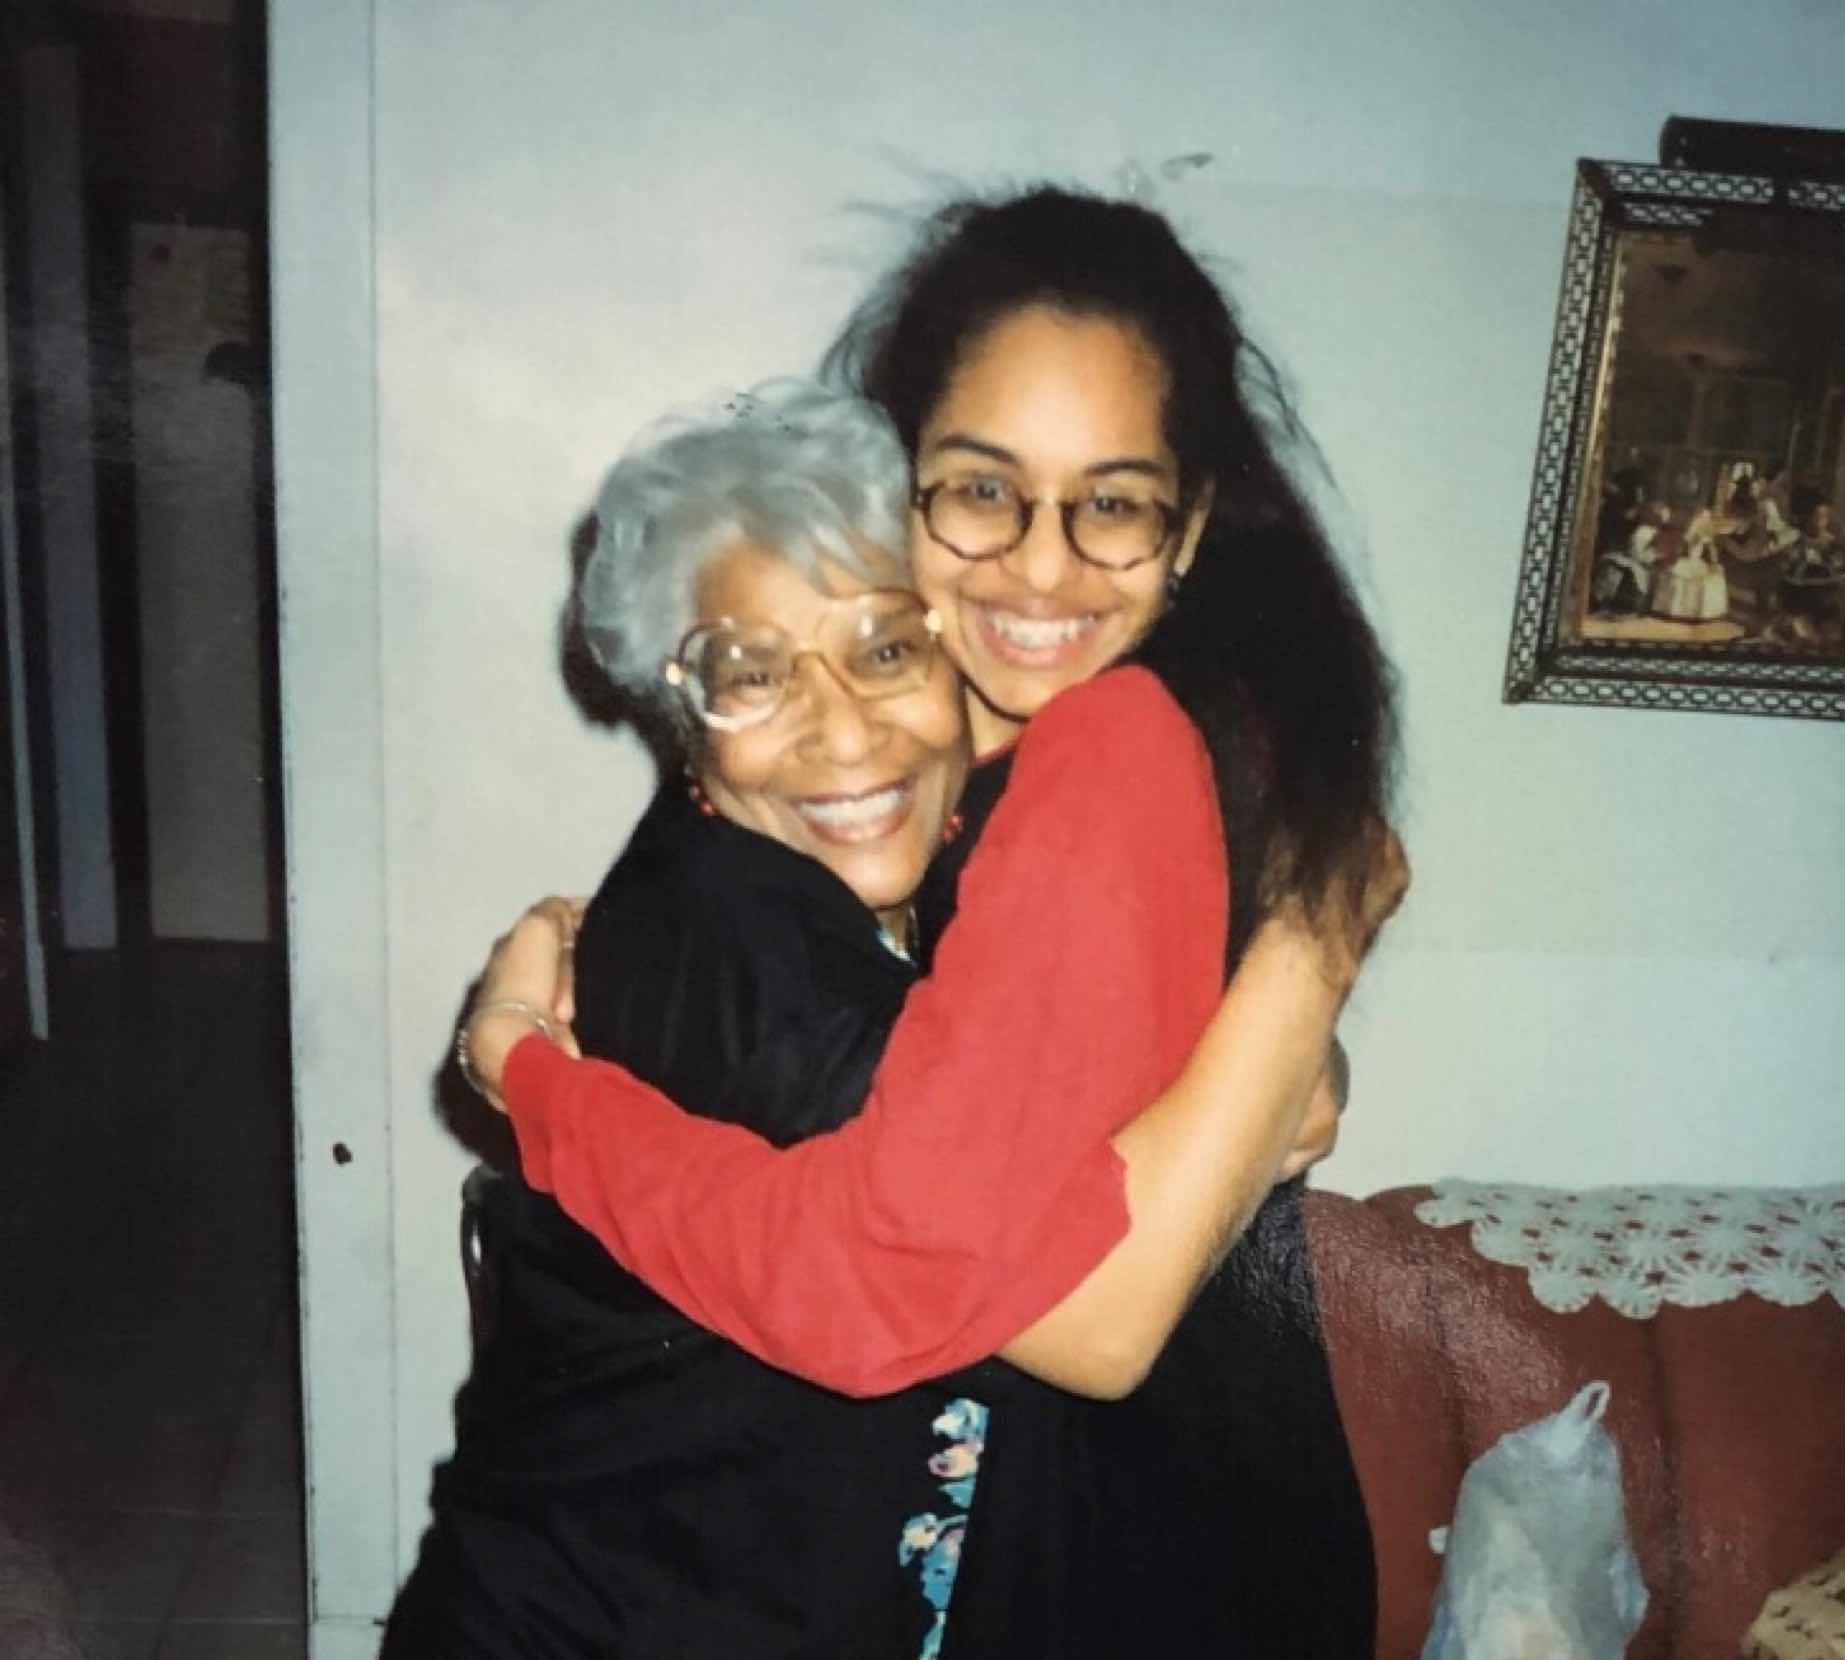 Sydney Kamlager with her grandmother